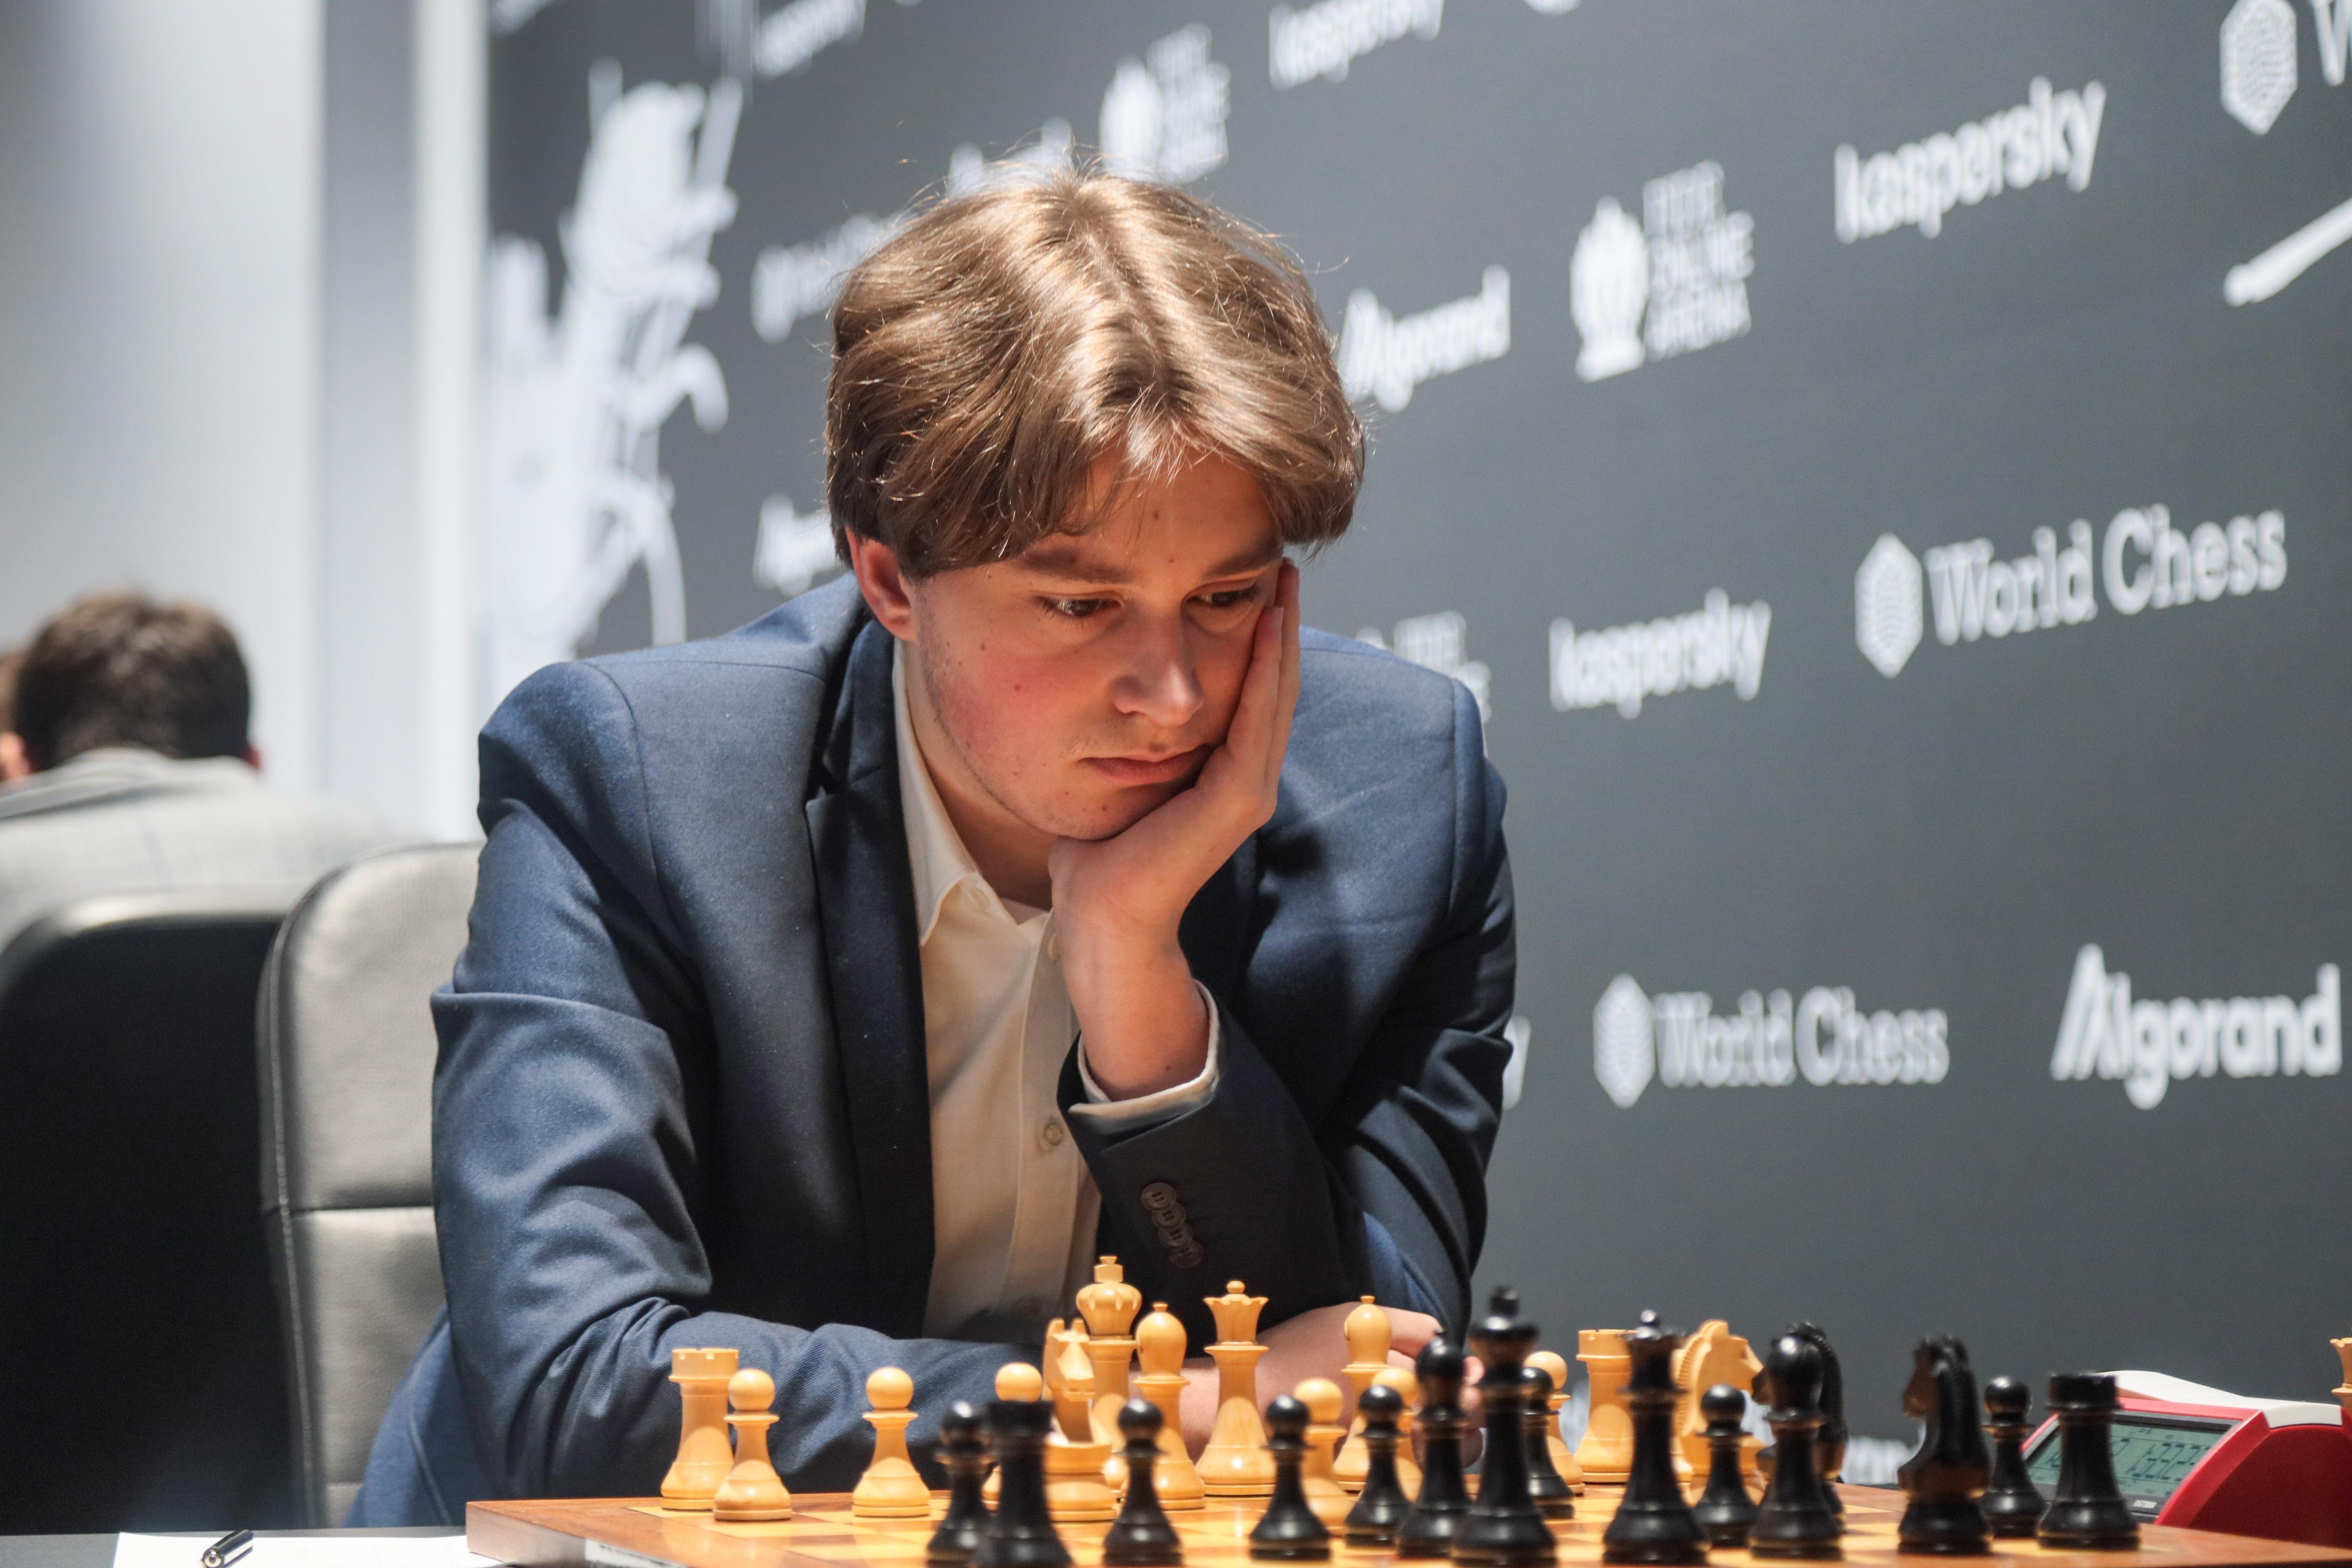 2022 FIDE Grand Prix Berlin Leg 3, R1: 4 Wins, Fighting Chess 